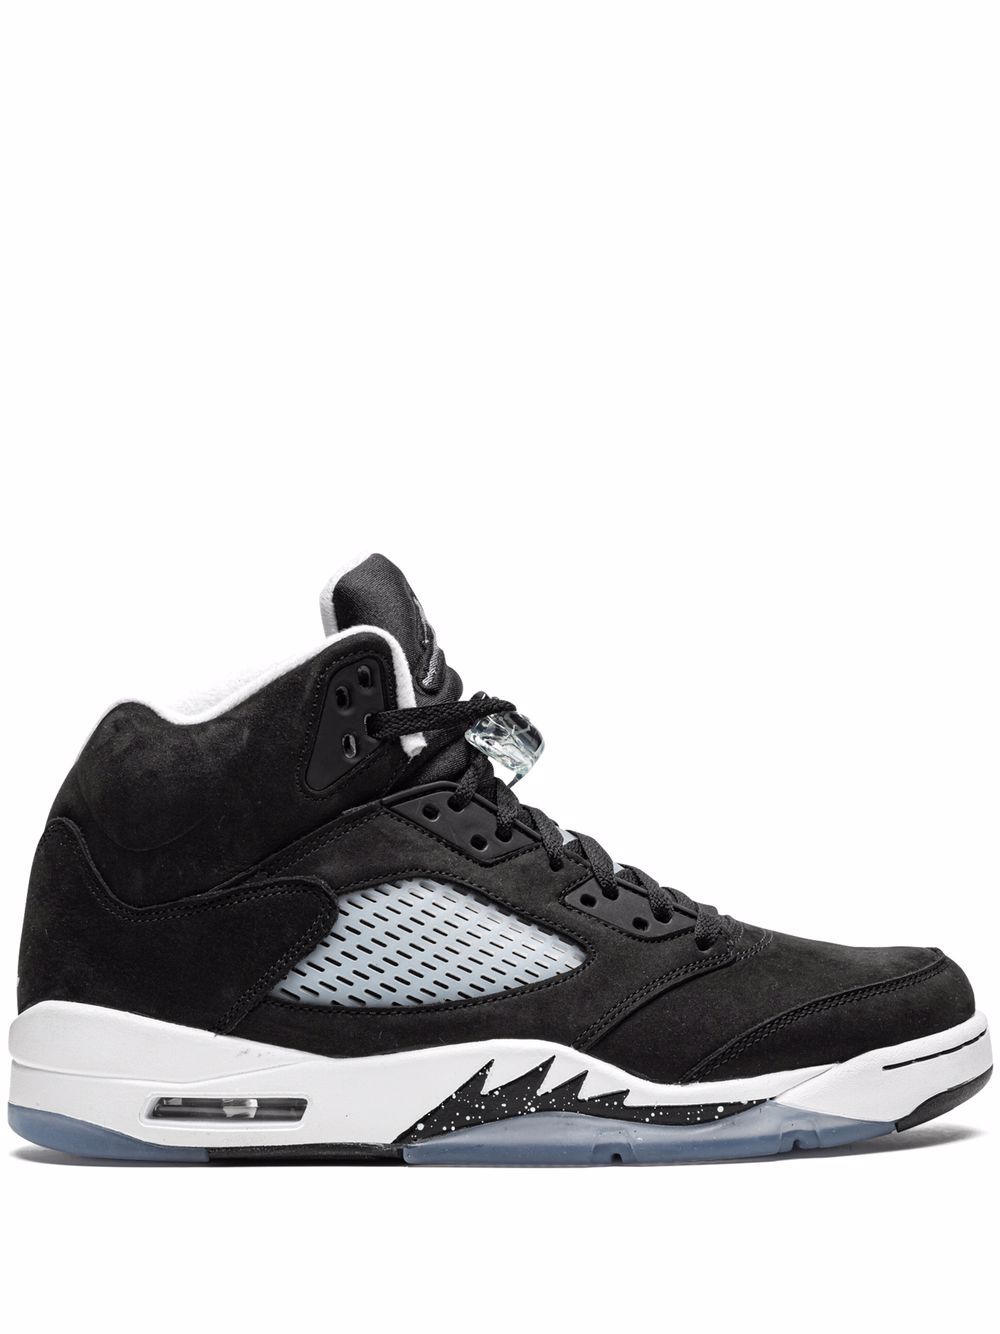 Jordan Air Jordan 5 Retro sneakers